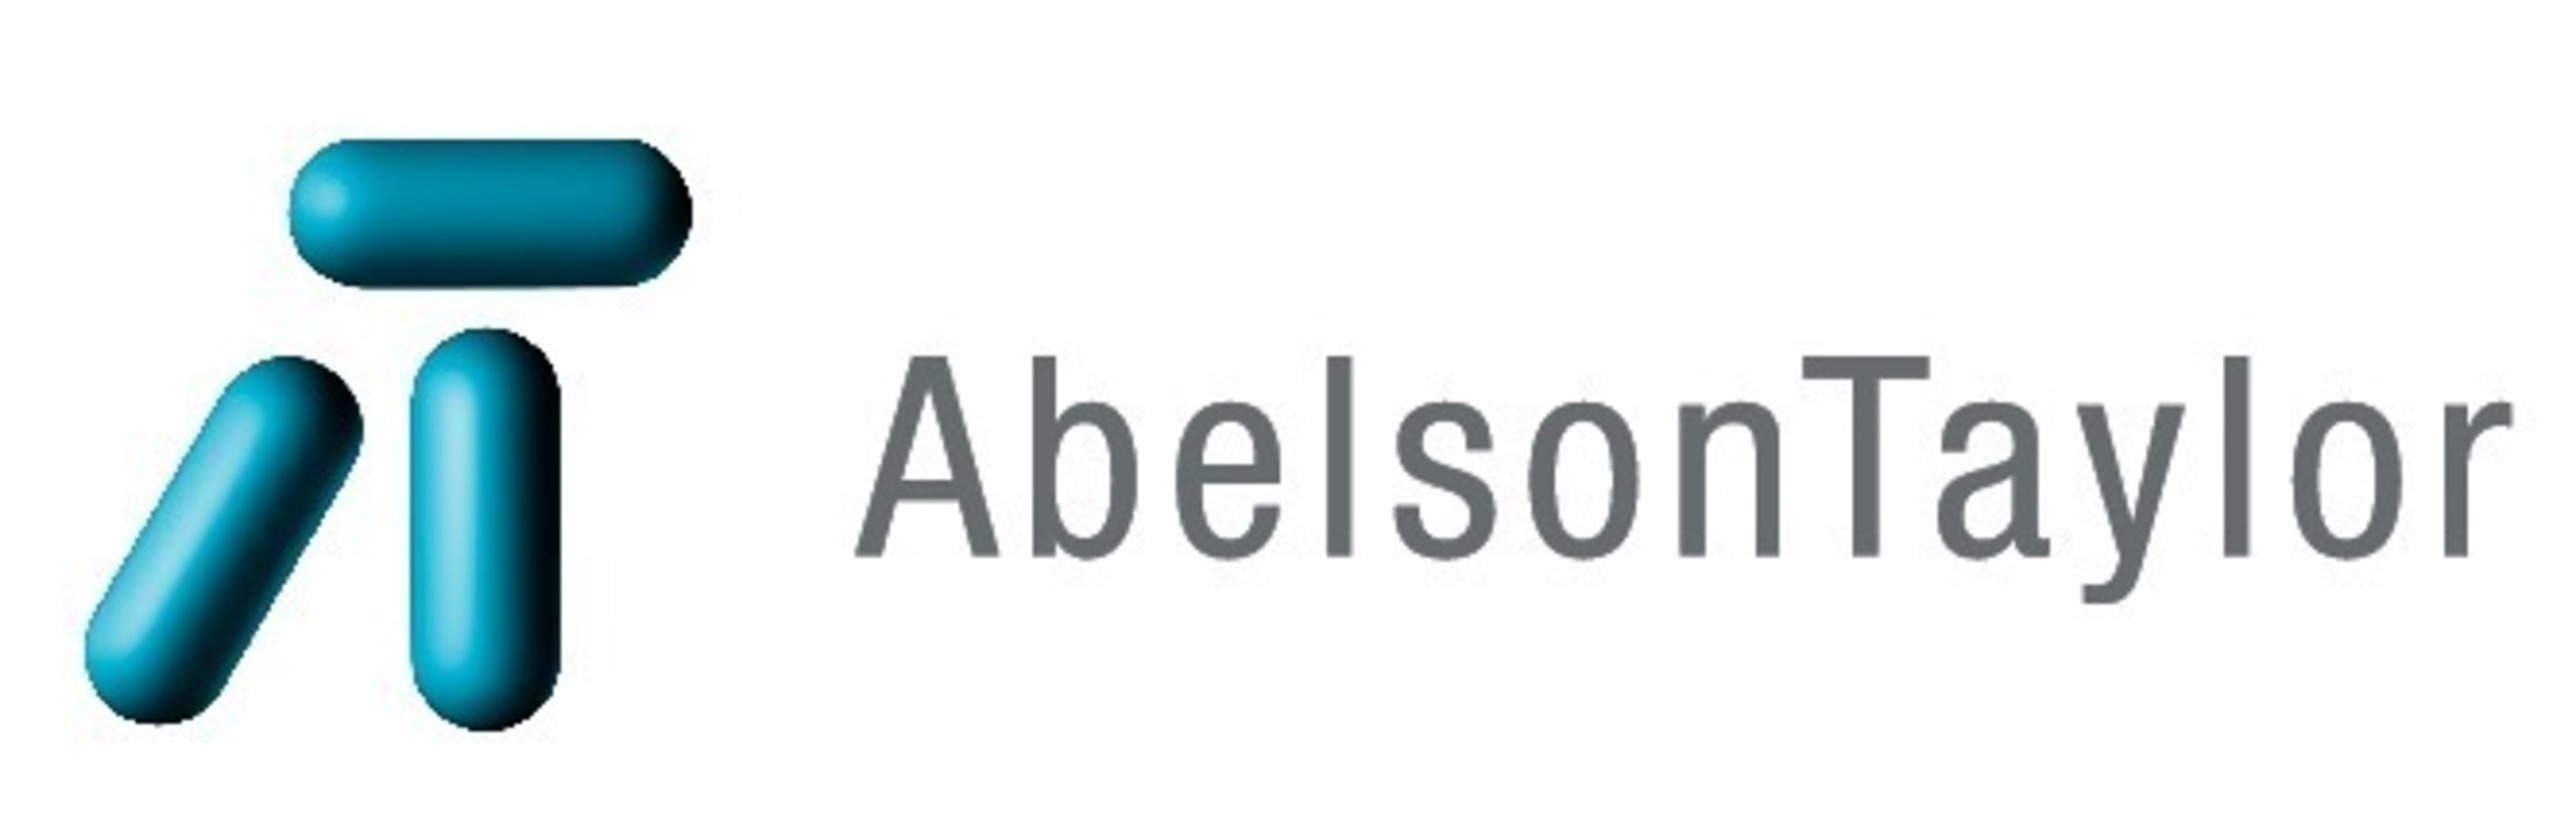 AbelsonTaylor Logo (PRNewsFoto/AbelsonTaylor)